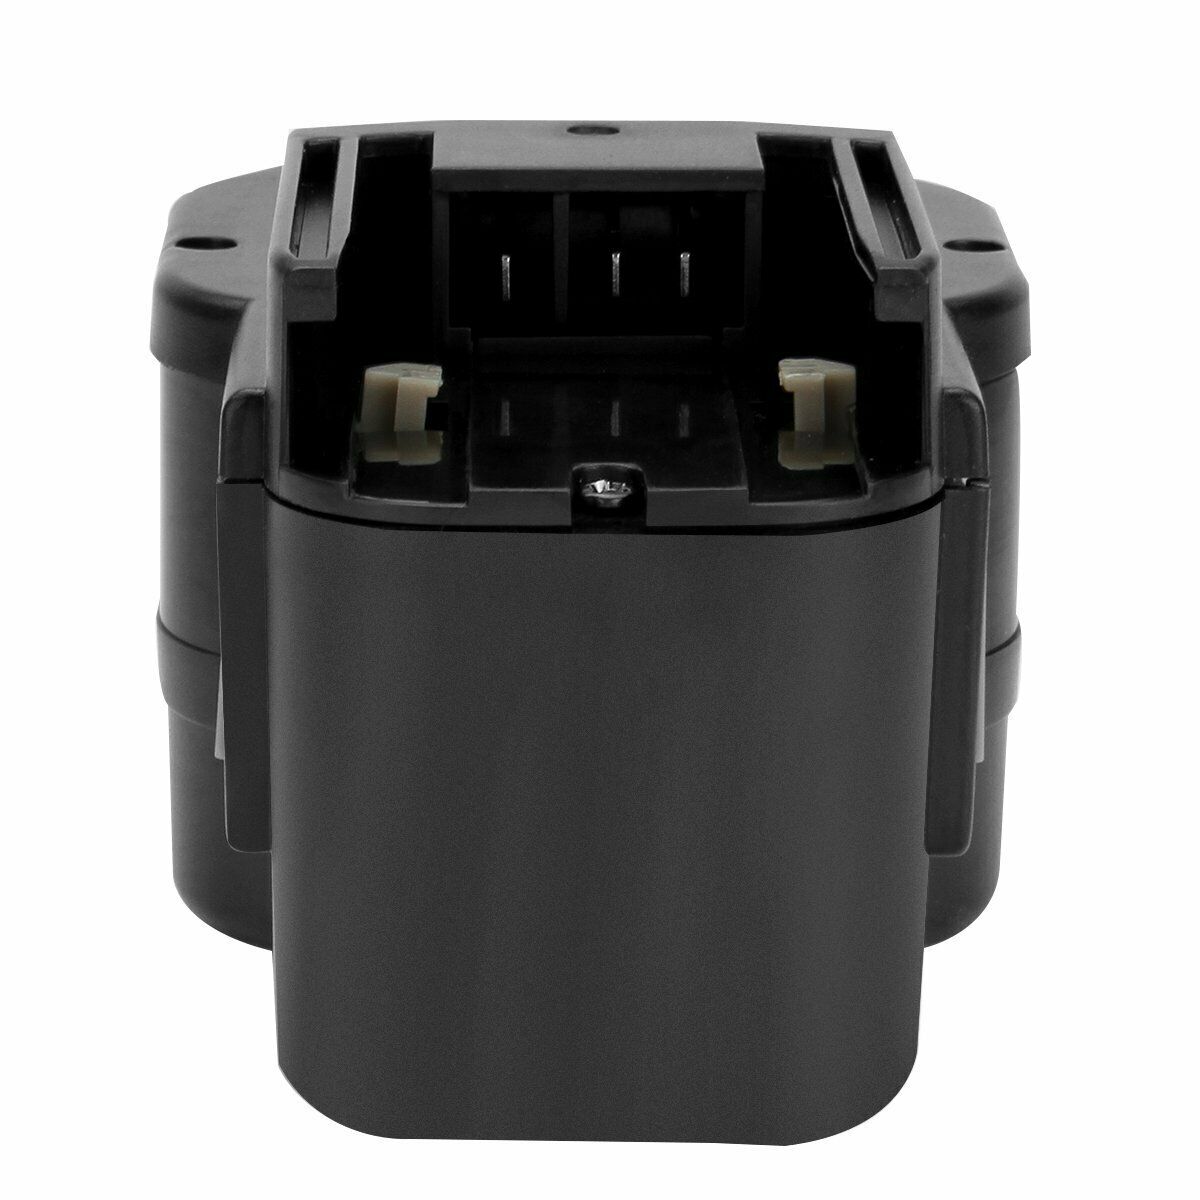 12V Atlas Copco AEG Milwaukee batteria compatibile